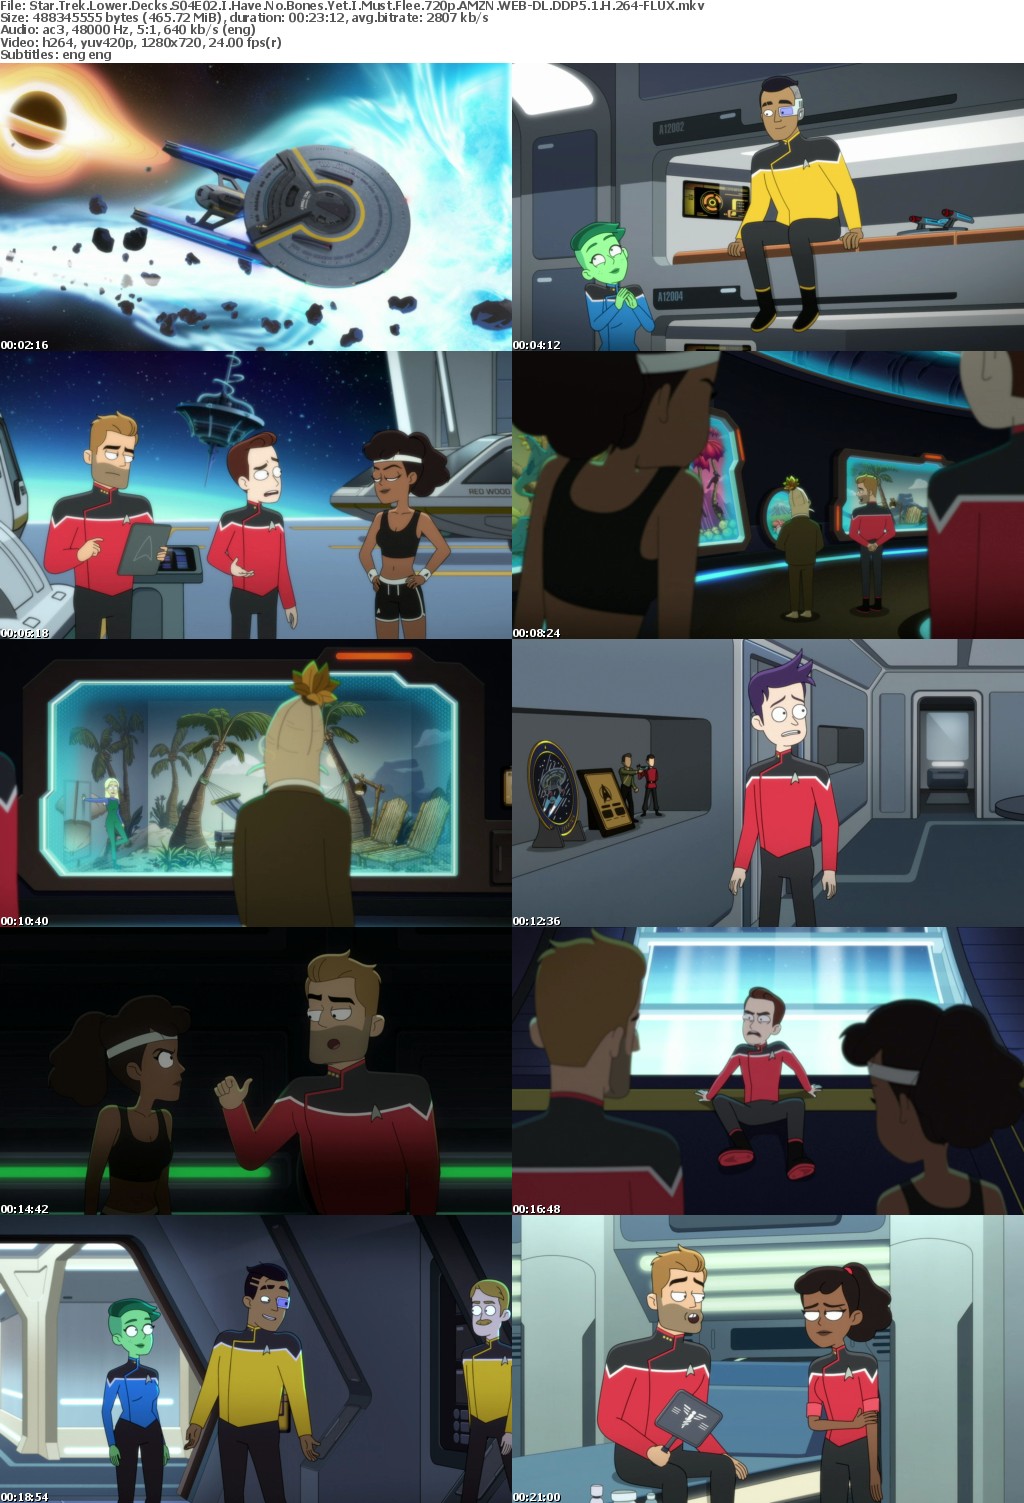 Star Trek Lower Decks S04E02 I Have No Bones Yet I Must Flee 720p AMZN WEB-DL DDP5 1 H 264-FLUX